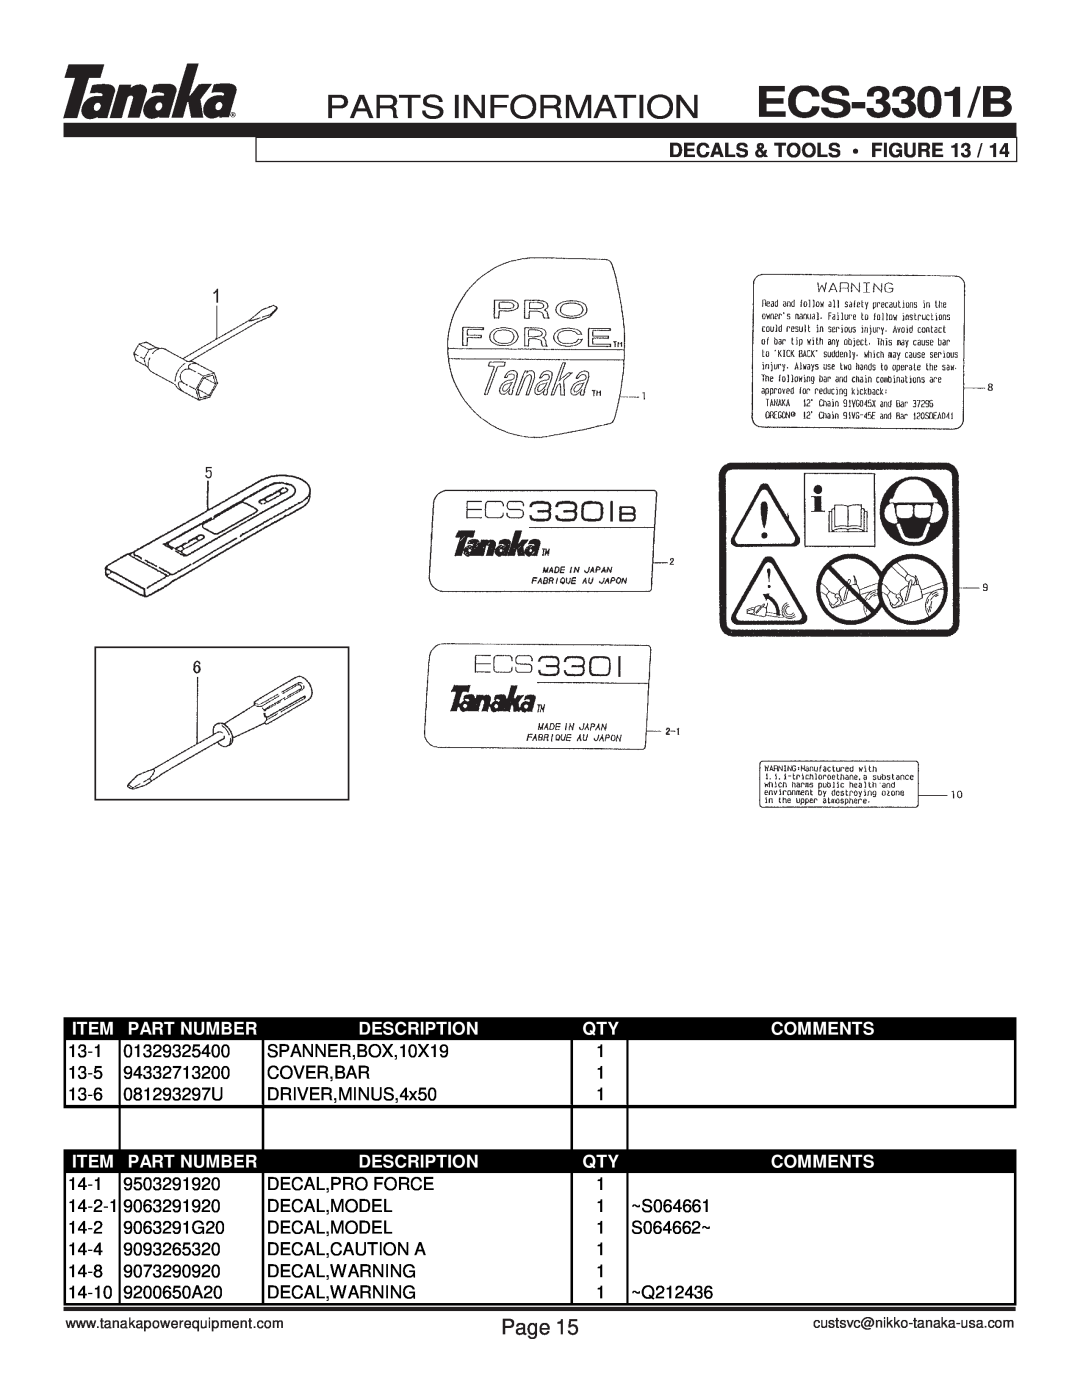 Tanaka manual Decals & Tools Figure, PARTS INFORMATION ECS-3301/B, Page, Part Number, Description, Comments 